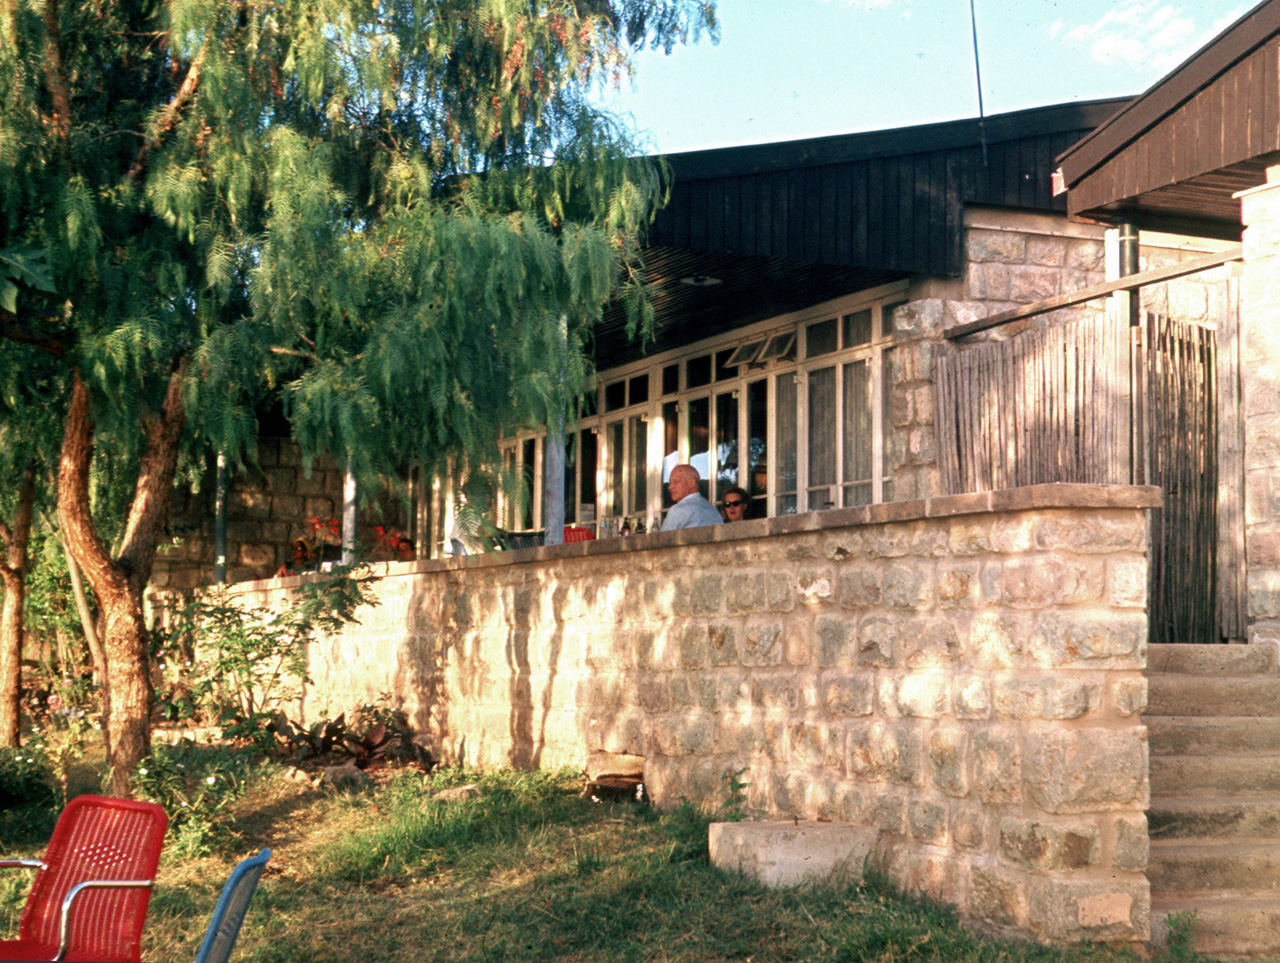 Koka dam cafe (in the 1960s)